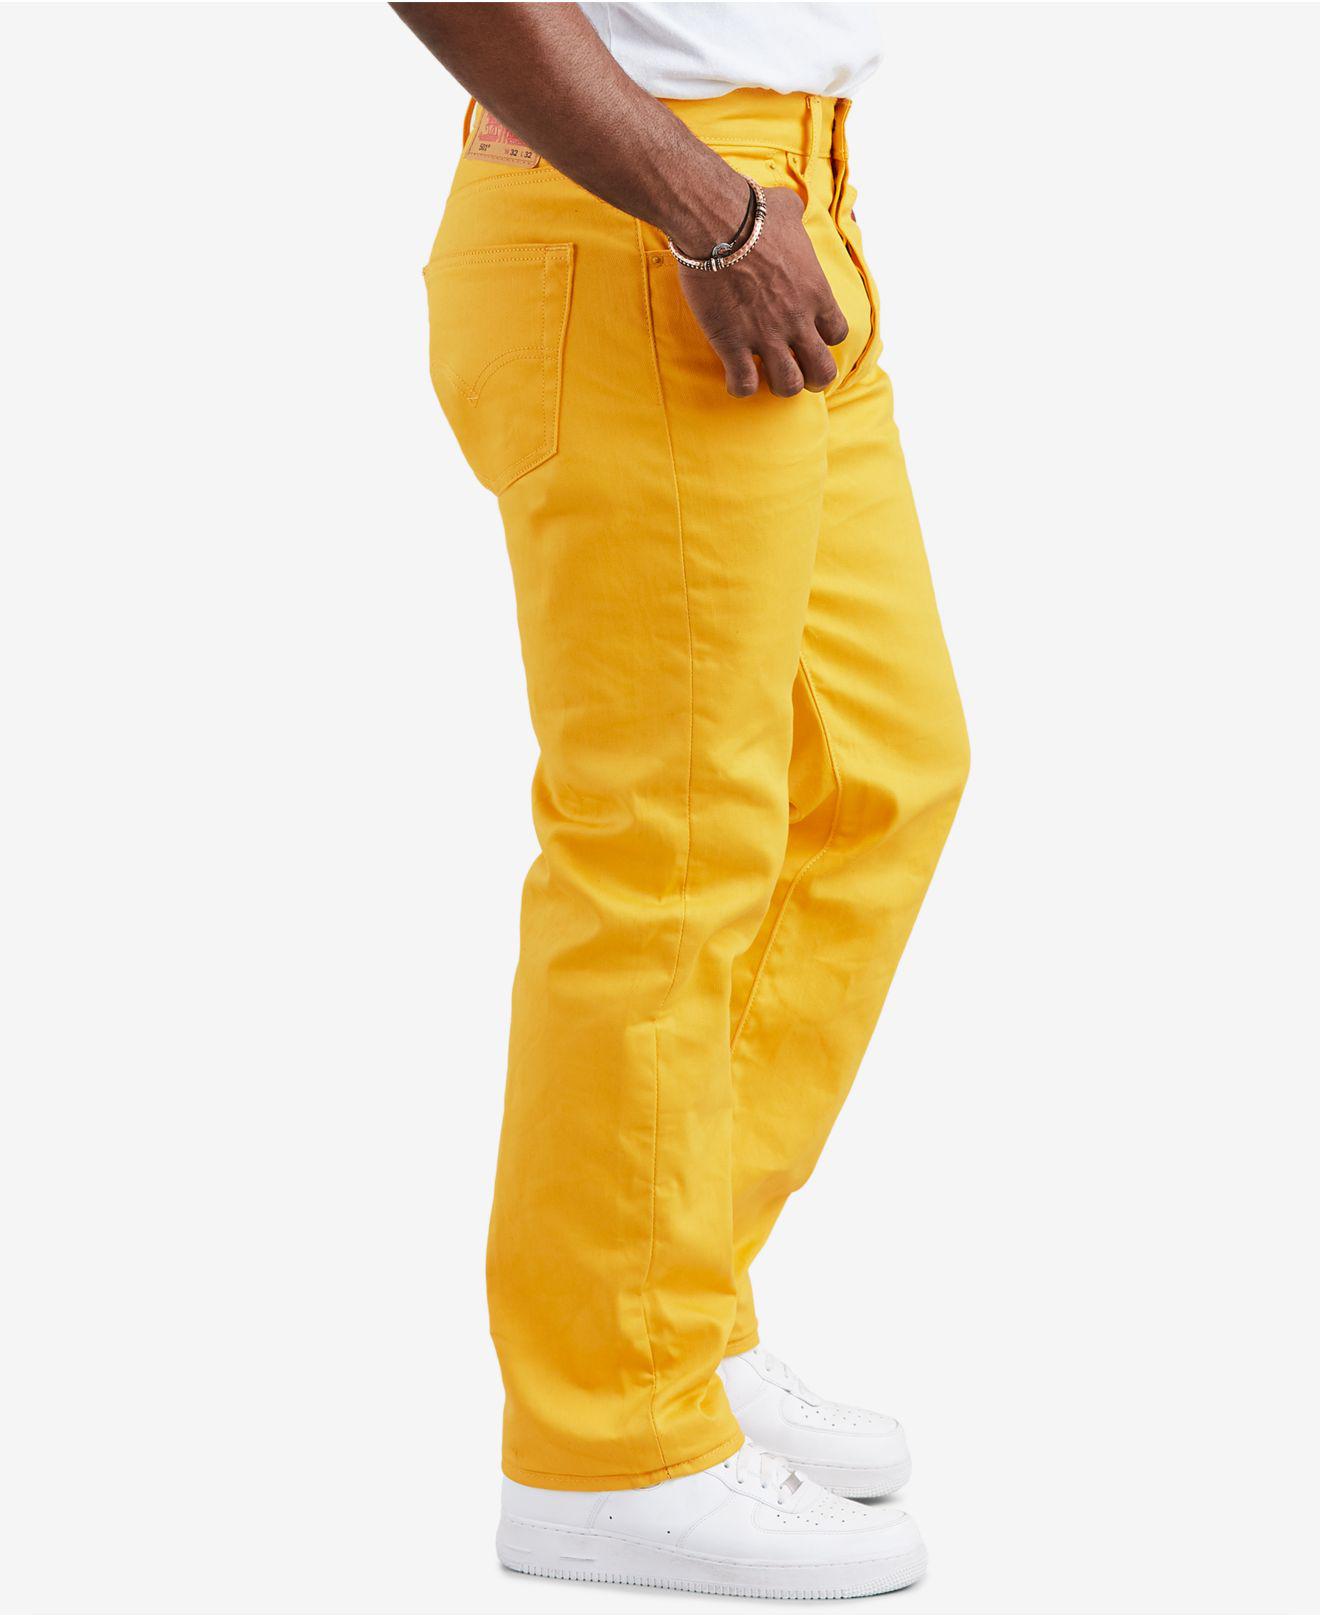 yellow levi jeans